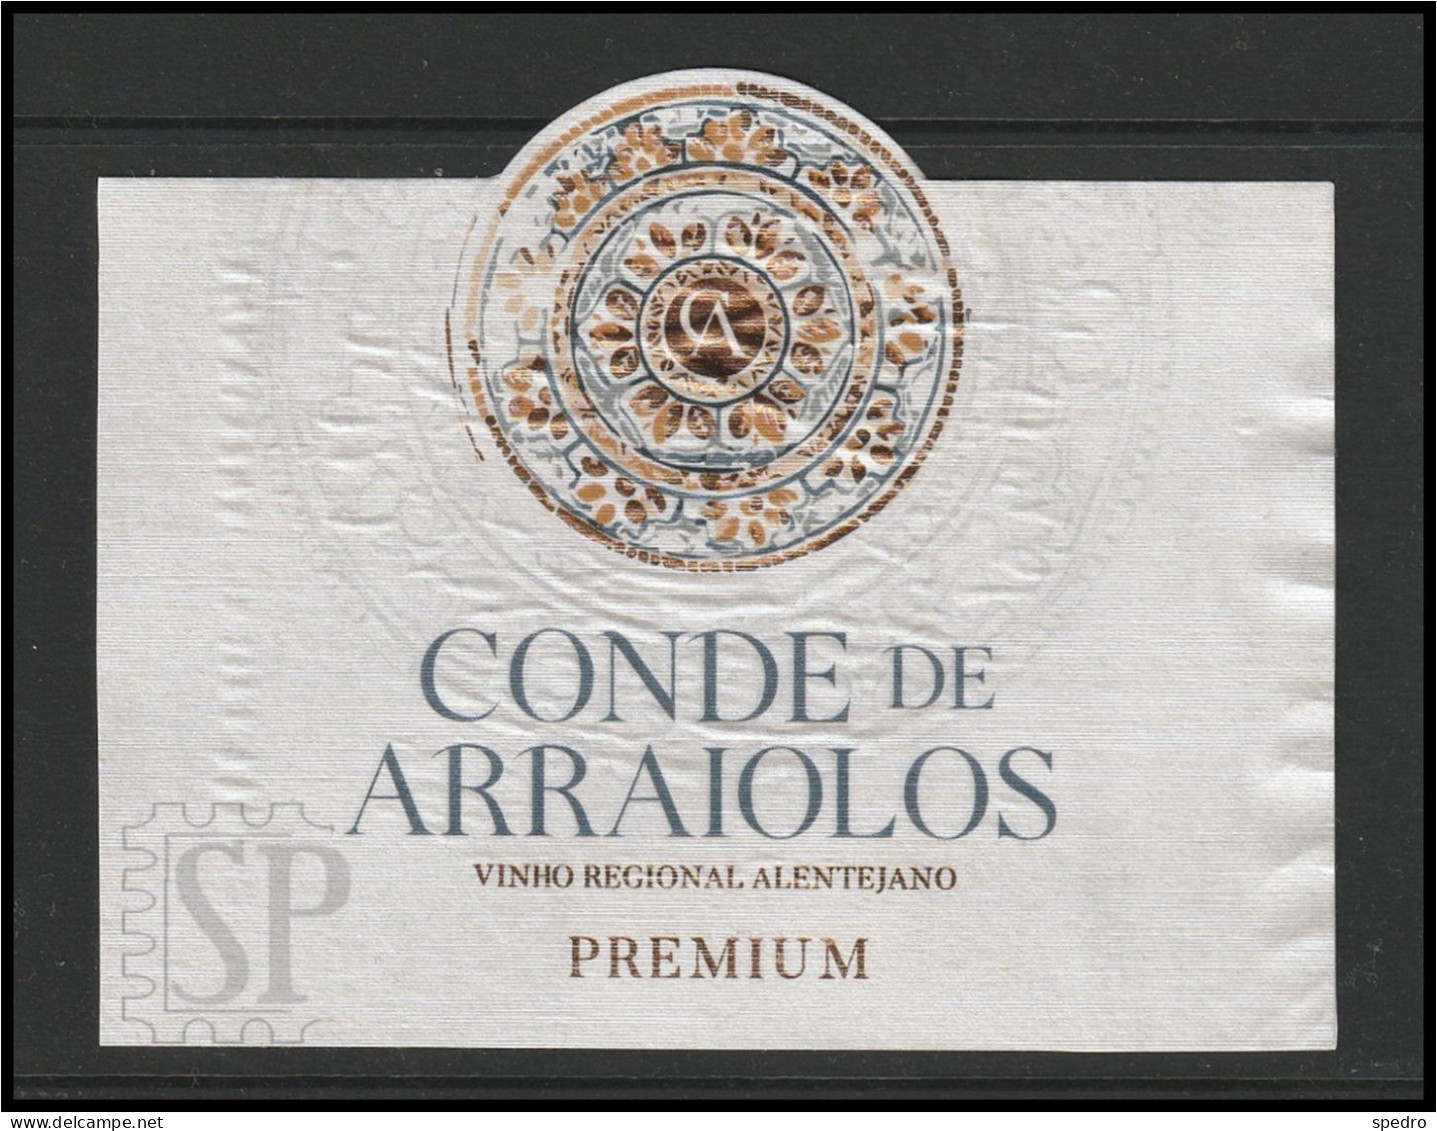 Portugal 2021 Rótulo Vinho Branco Conde De Arraiolos Premium White Wine Vin Blanc Herdade Das Mouras Alentejo - Rouges